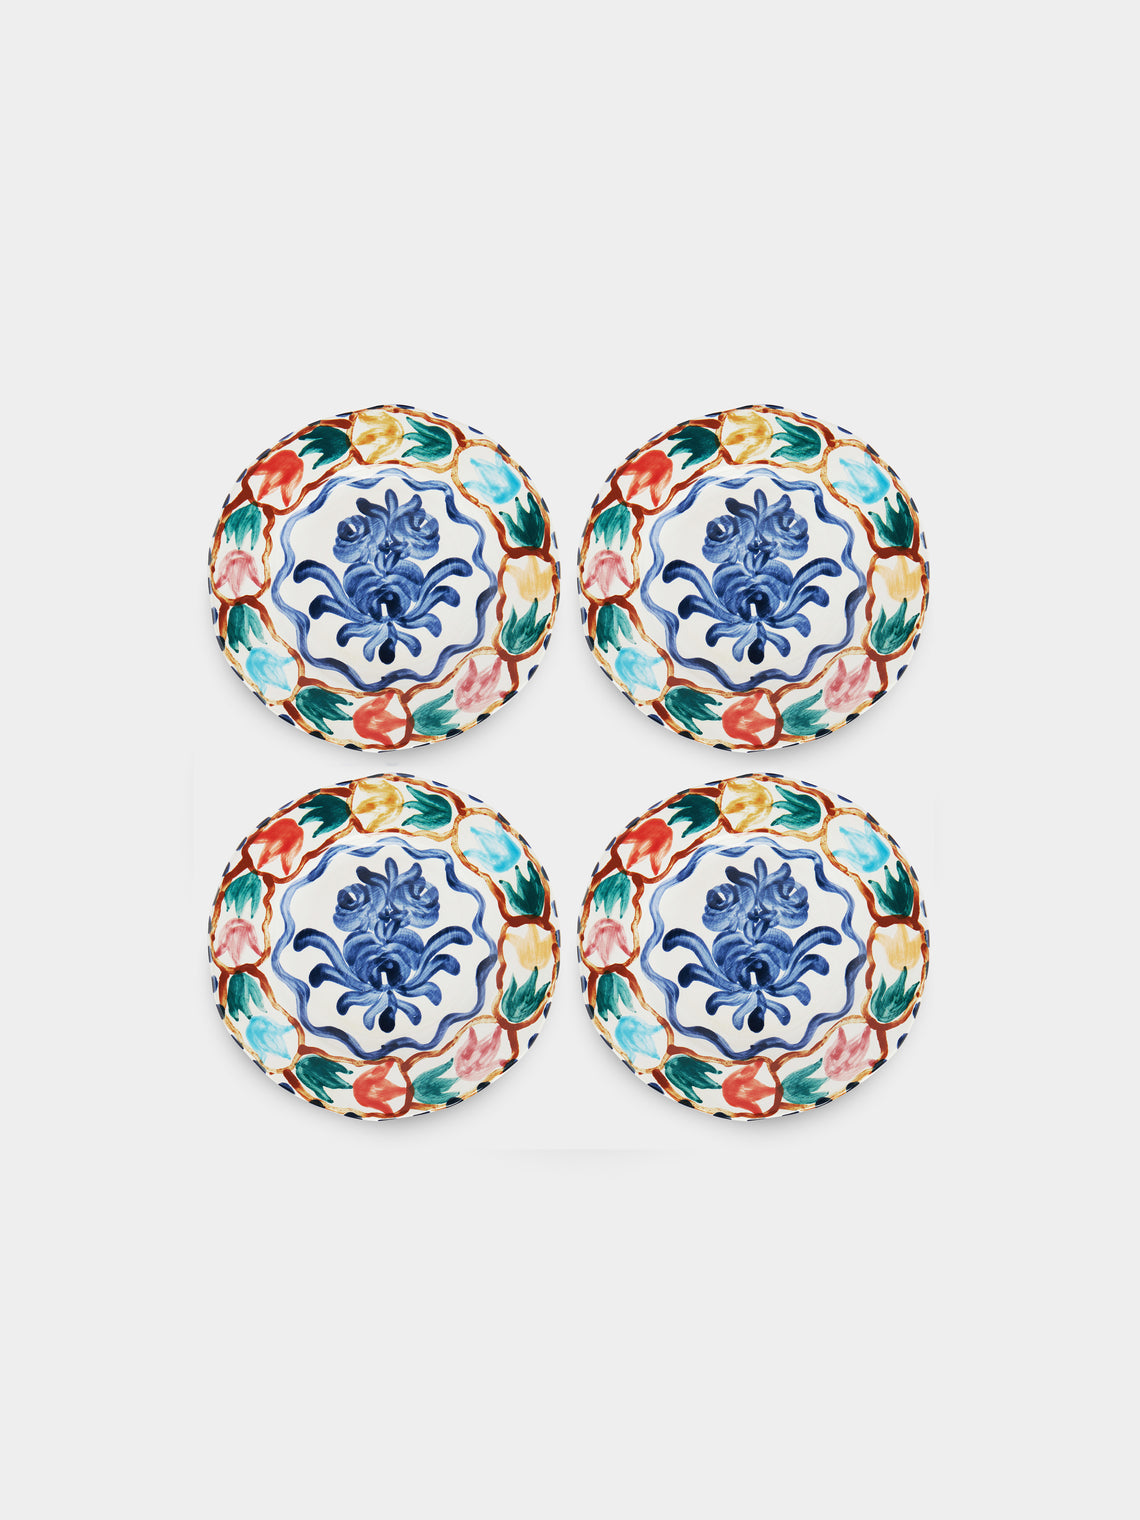 Zsuzsanna Nyul - Hand-Painted Ceramic Dessert Plates (Set of 4) -  - ABASK